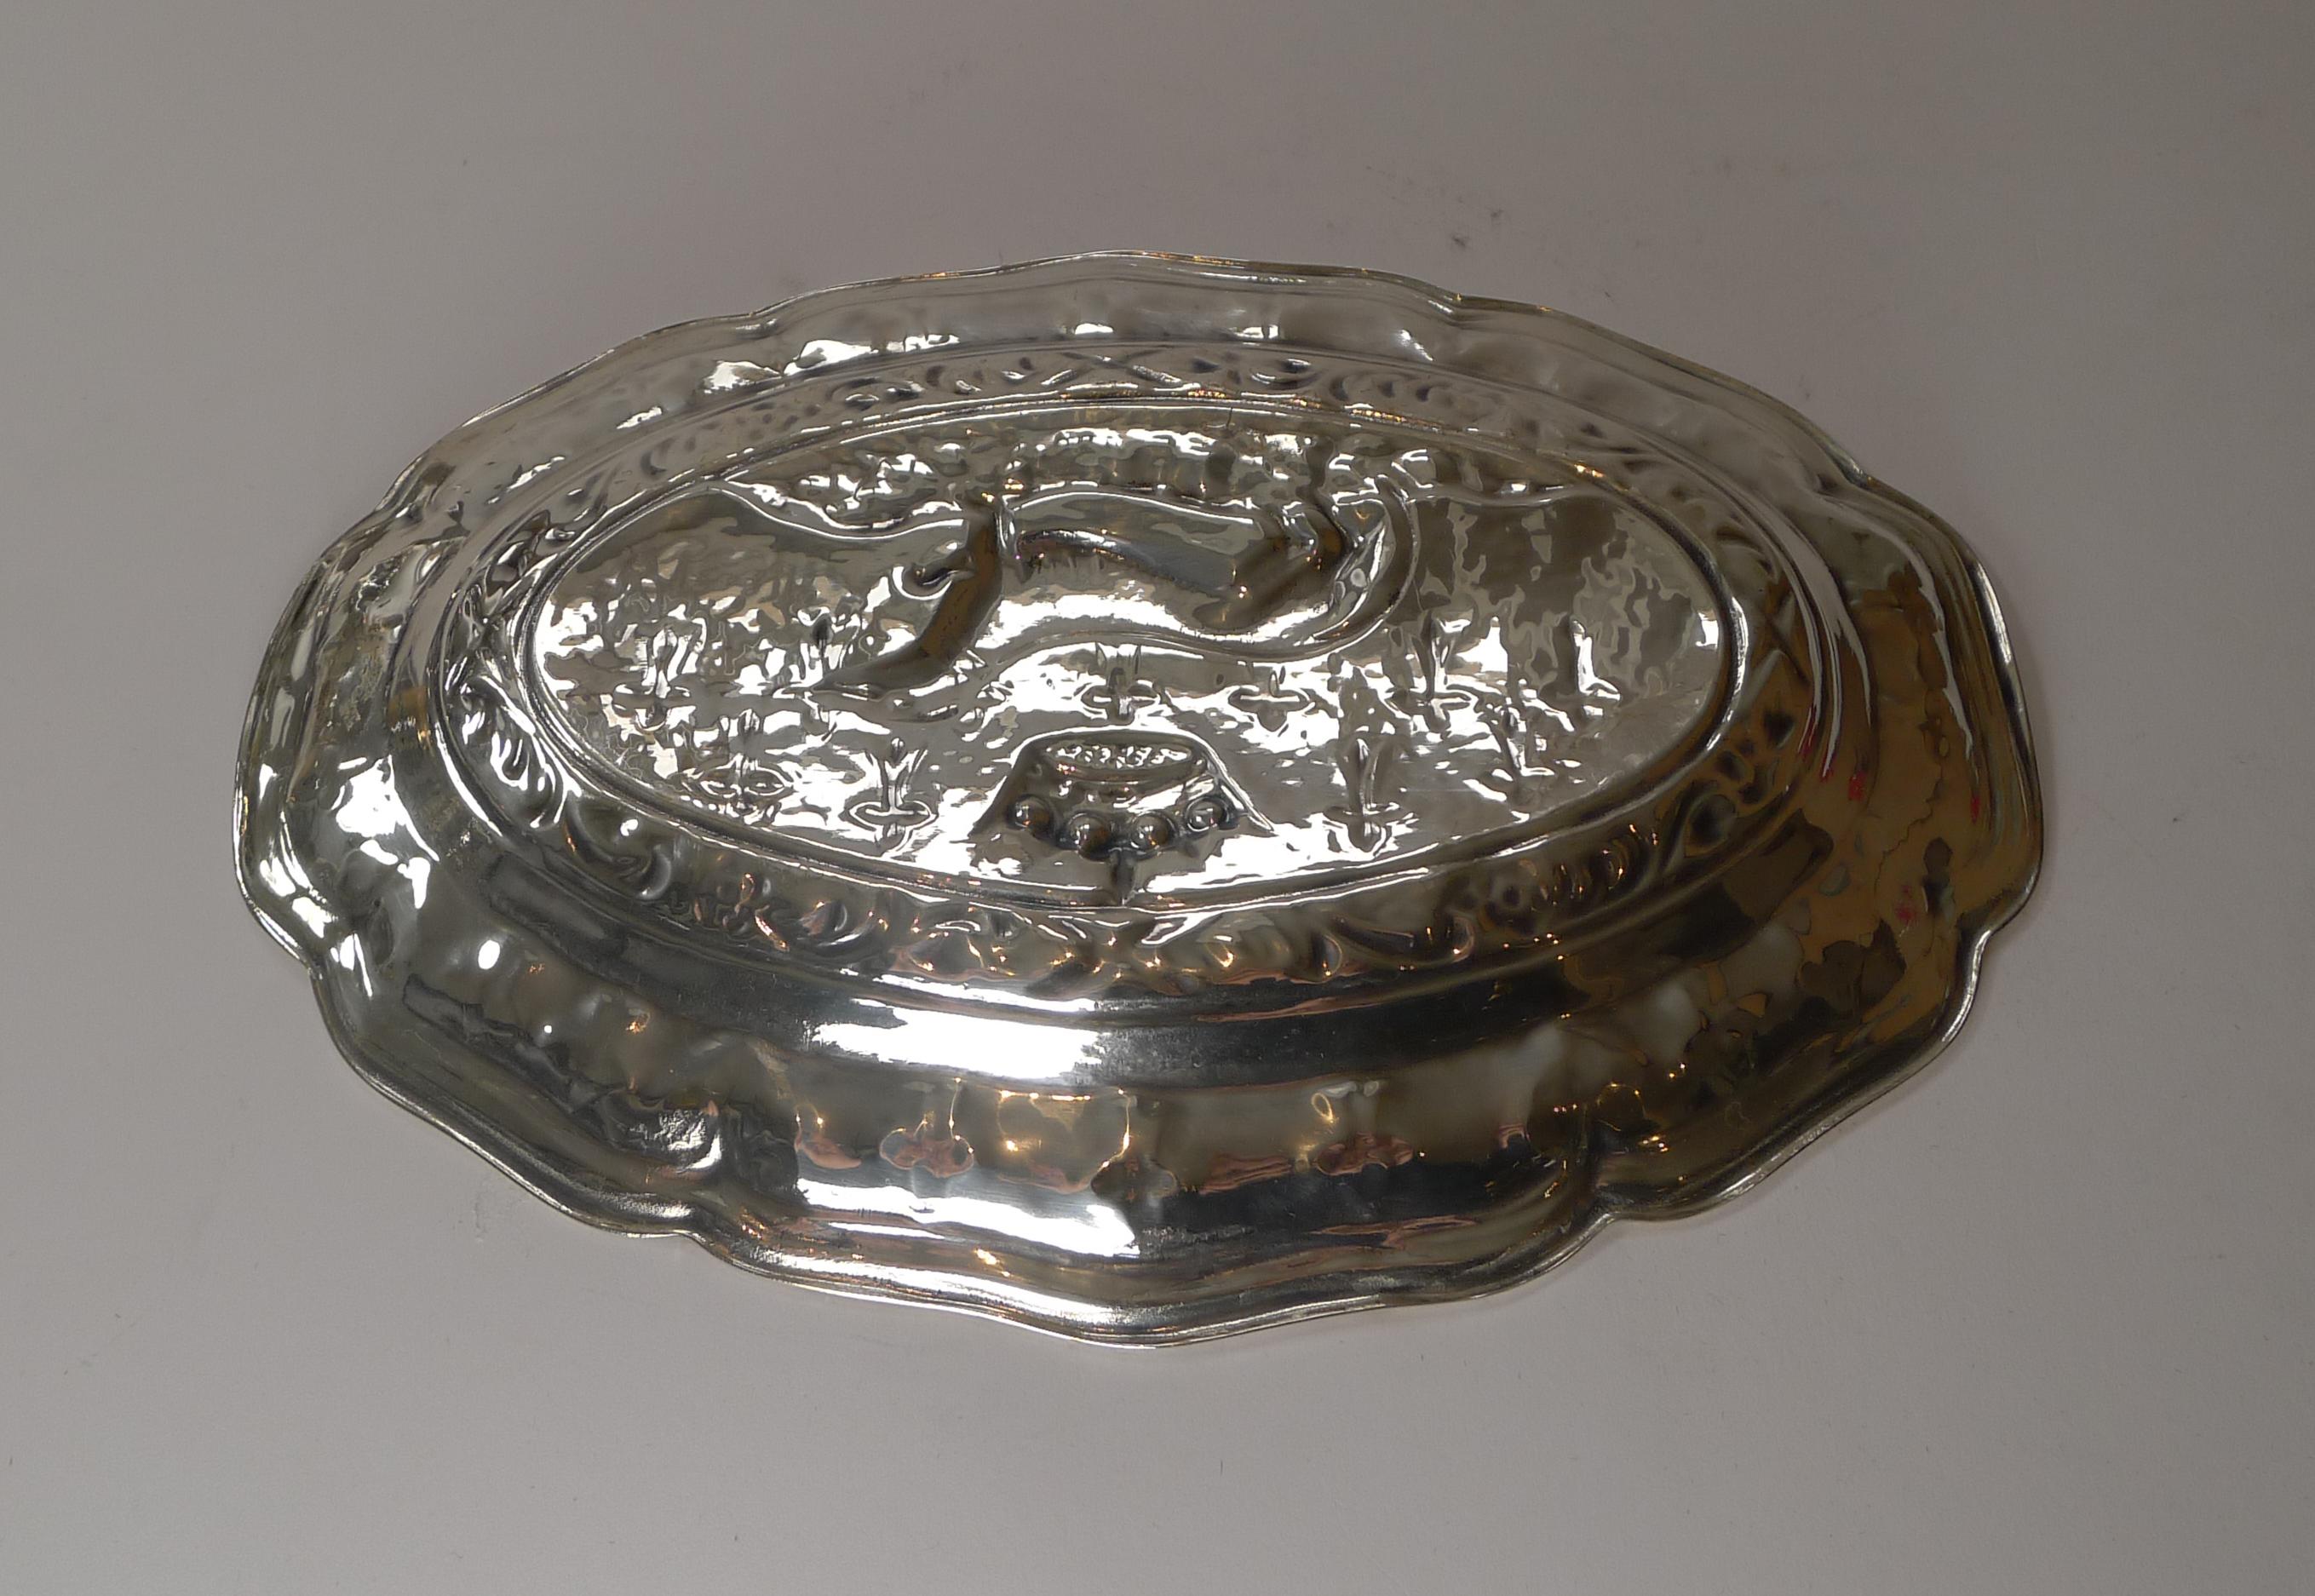 Vintage Silver Plated Decorative Plate by Valenti, Barcelona 1